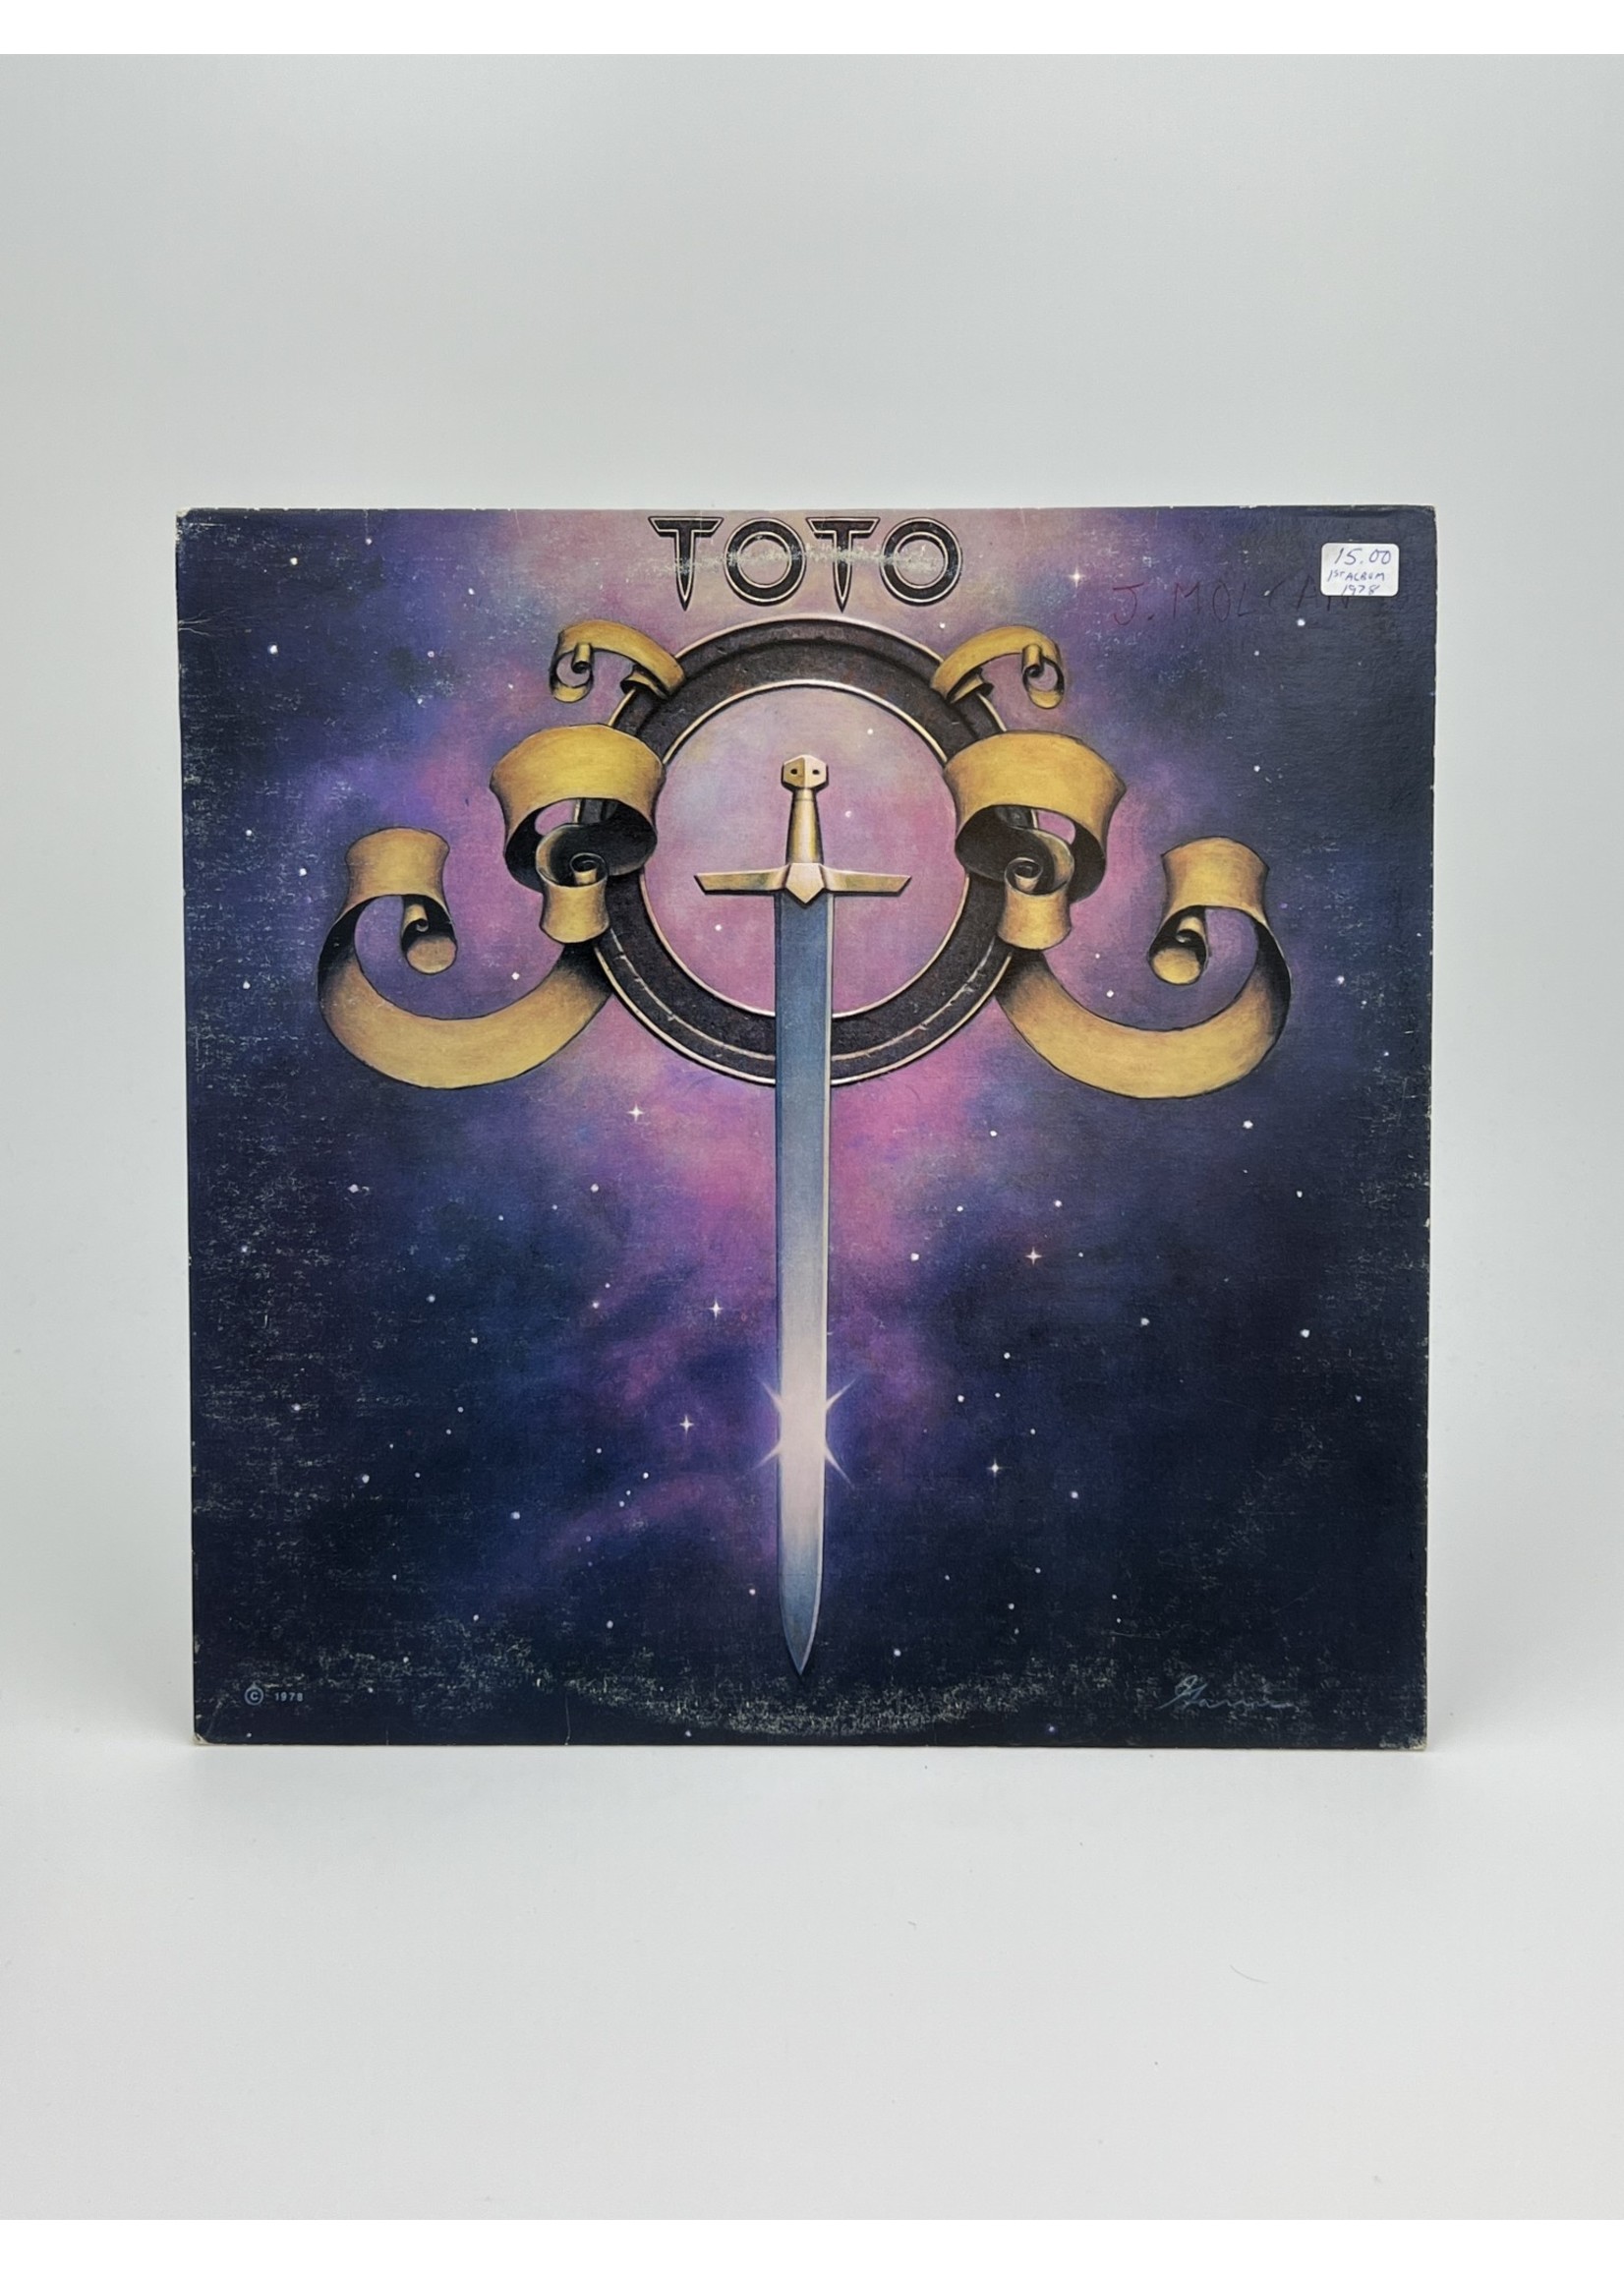 LP Toto var5 LP Record